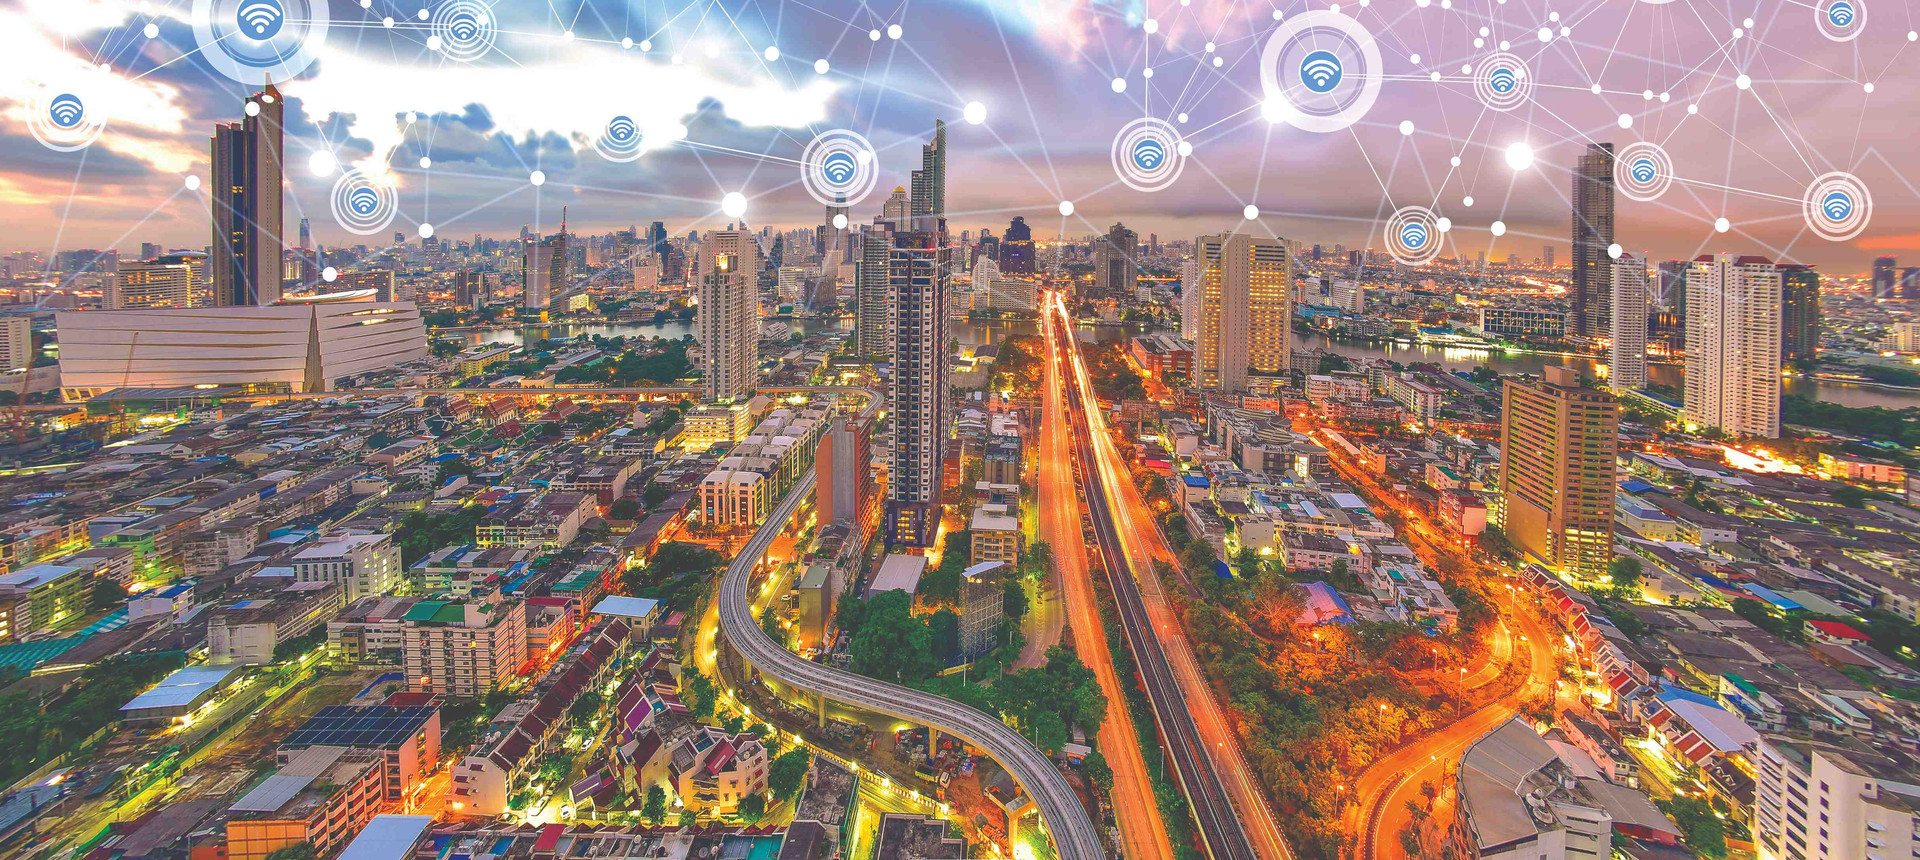 smart-city-wireless-communication-network-skyscrapers-background-financial-moderntechnology-compressed.jpg